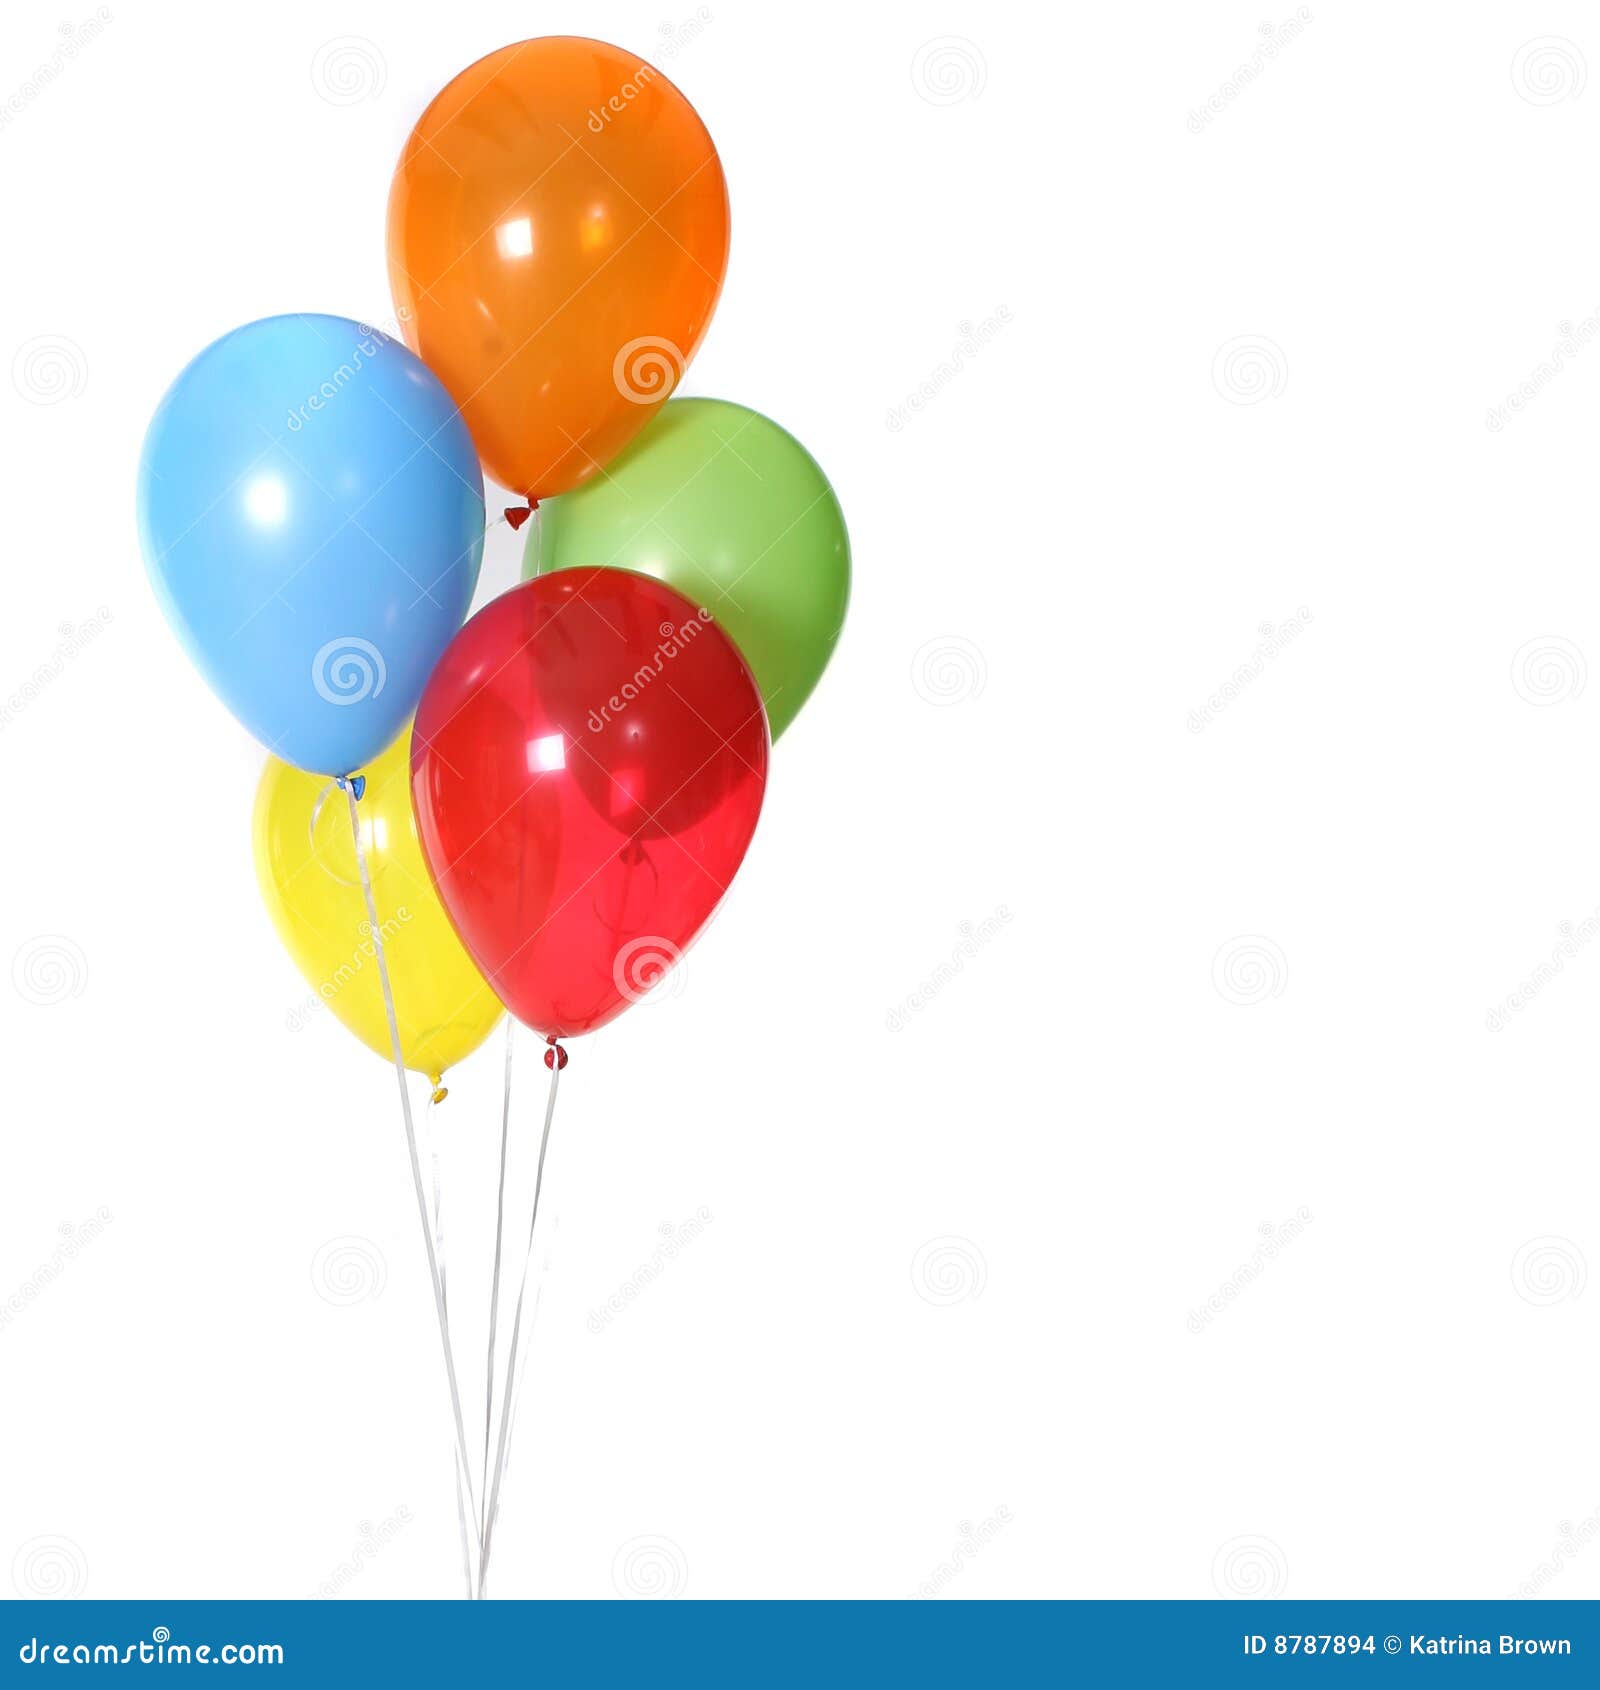 5 birthday celebration balloons